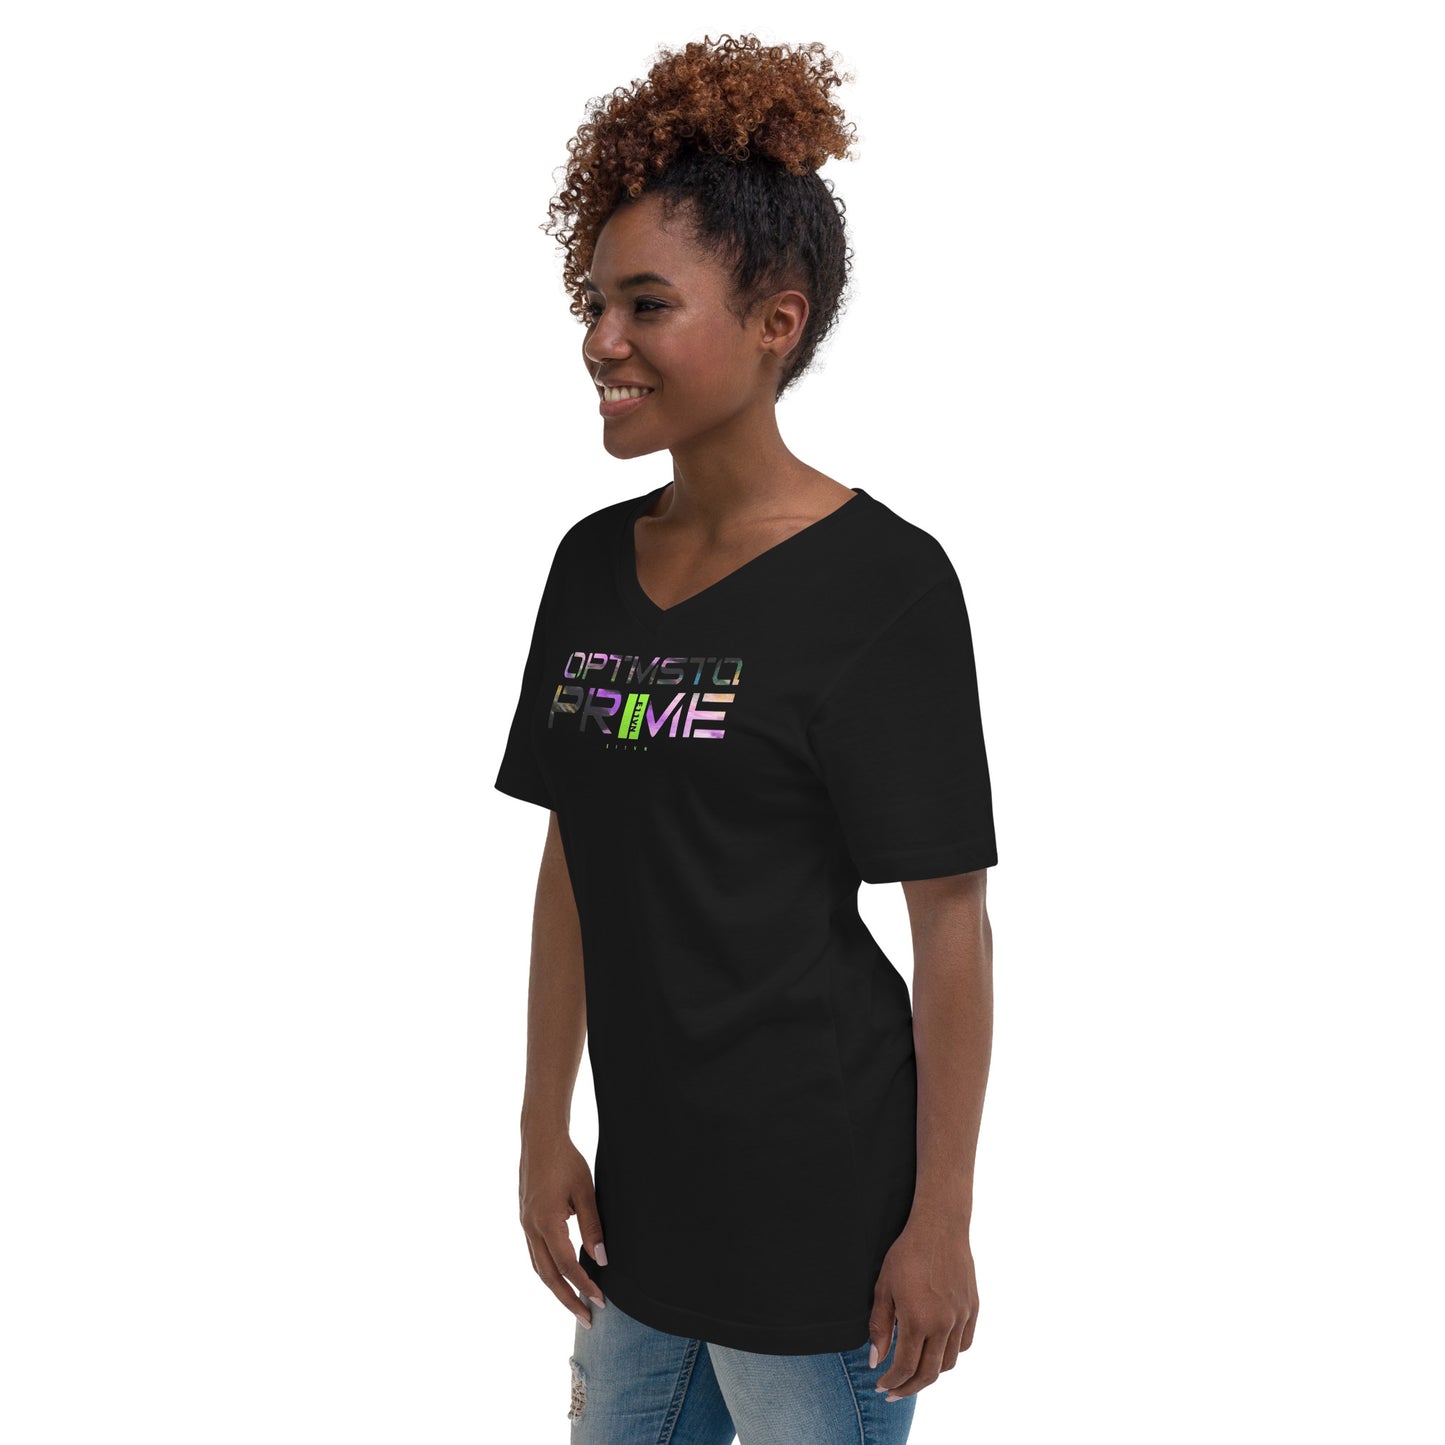 Optimstq PrIIMe Women's V-Neck T-Shirt